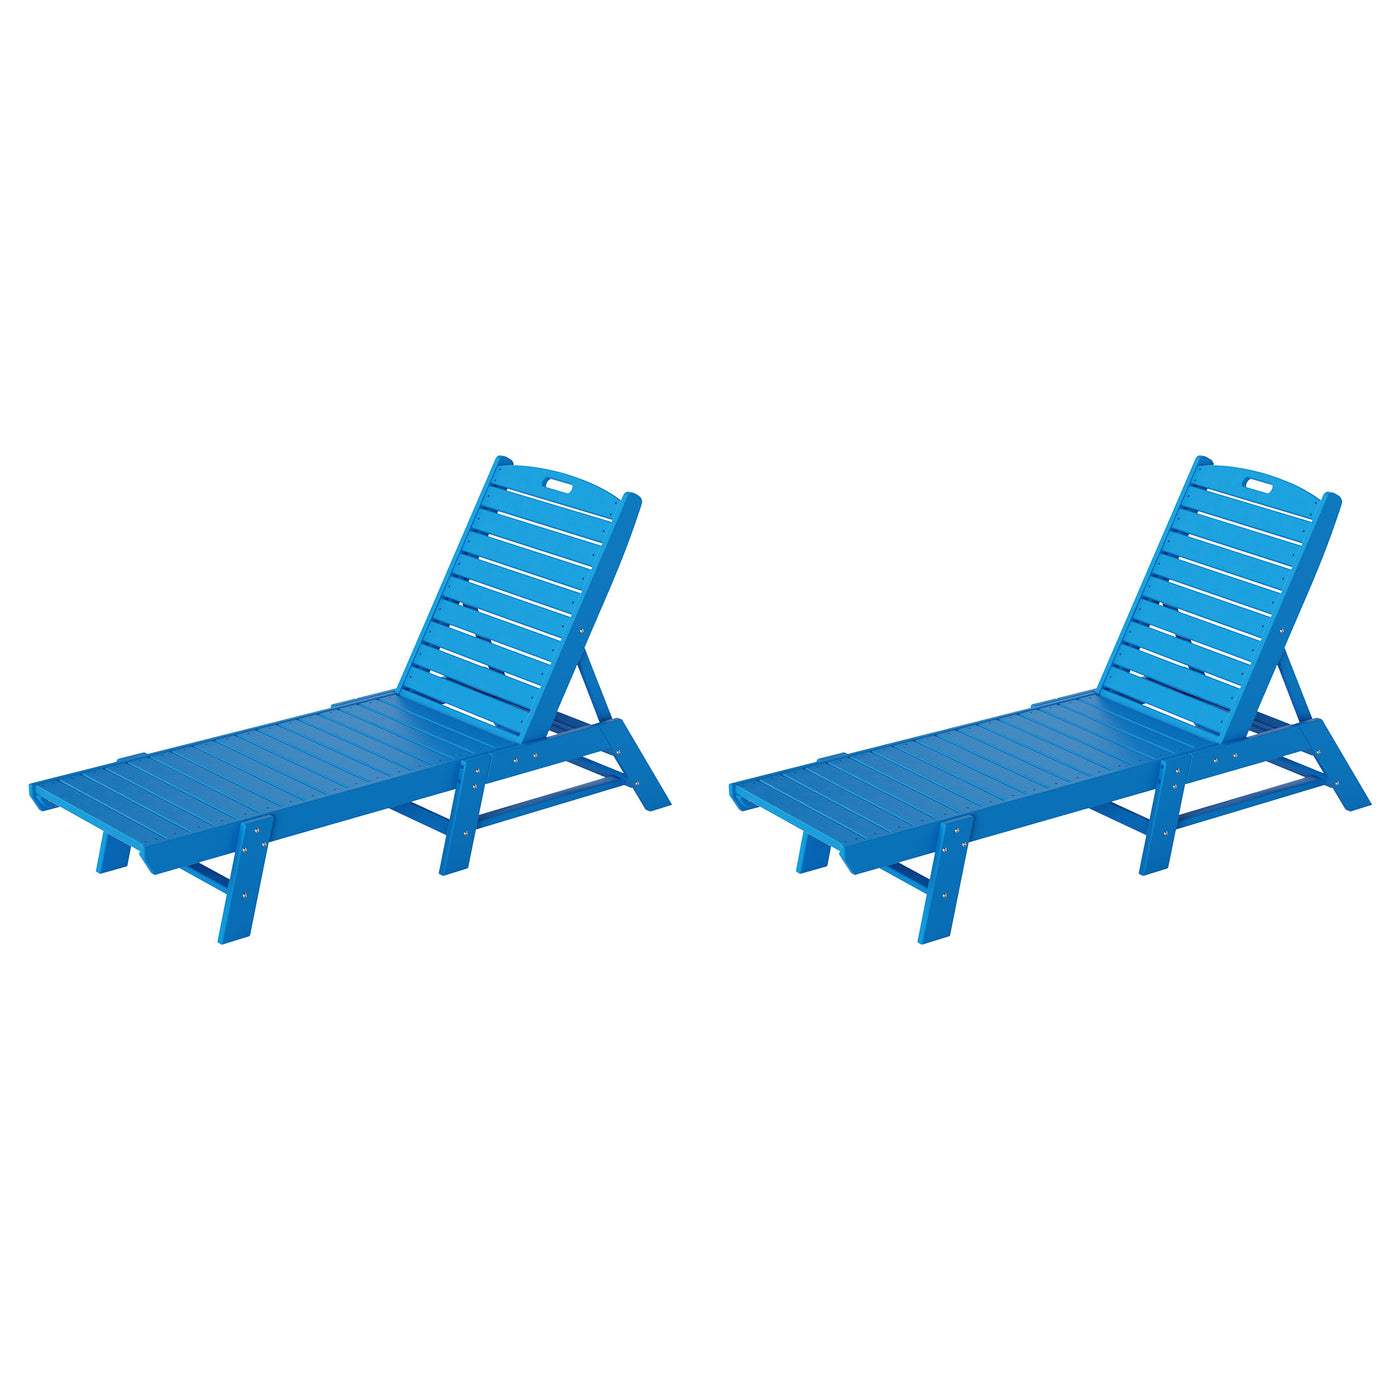 Malibu Adirondack Outdoor Patio Armless Chaise Lounge (Set of 2)